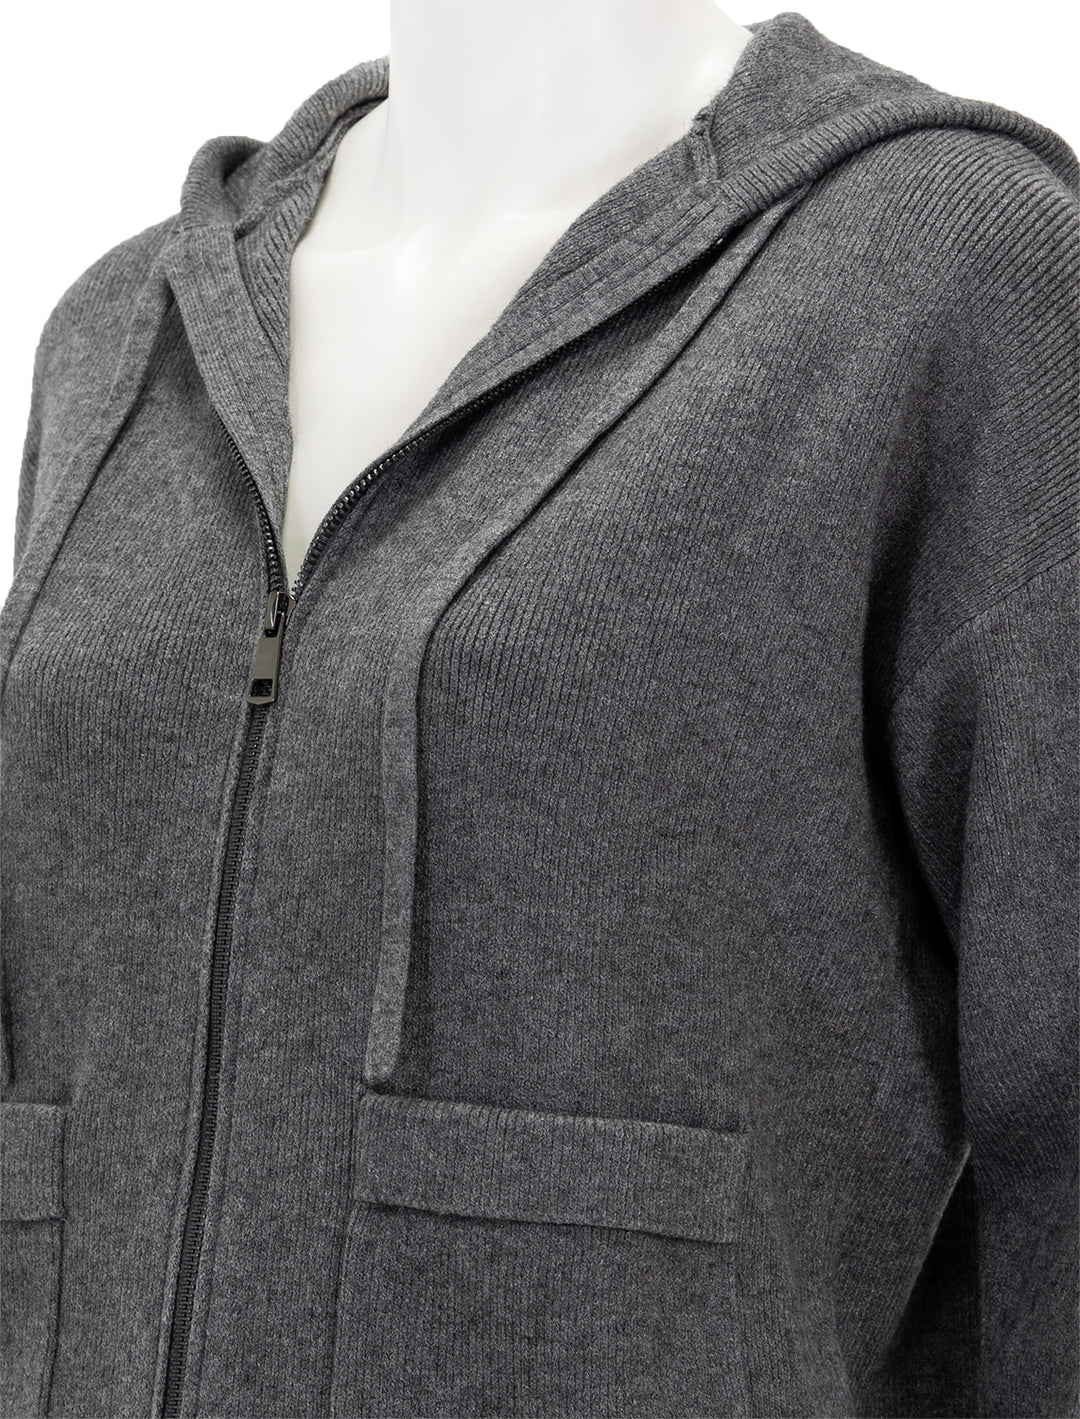 Close-up view of Splendid's cora zip sweater hoodie in heather charcoal.